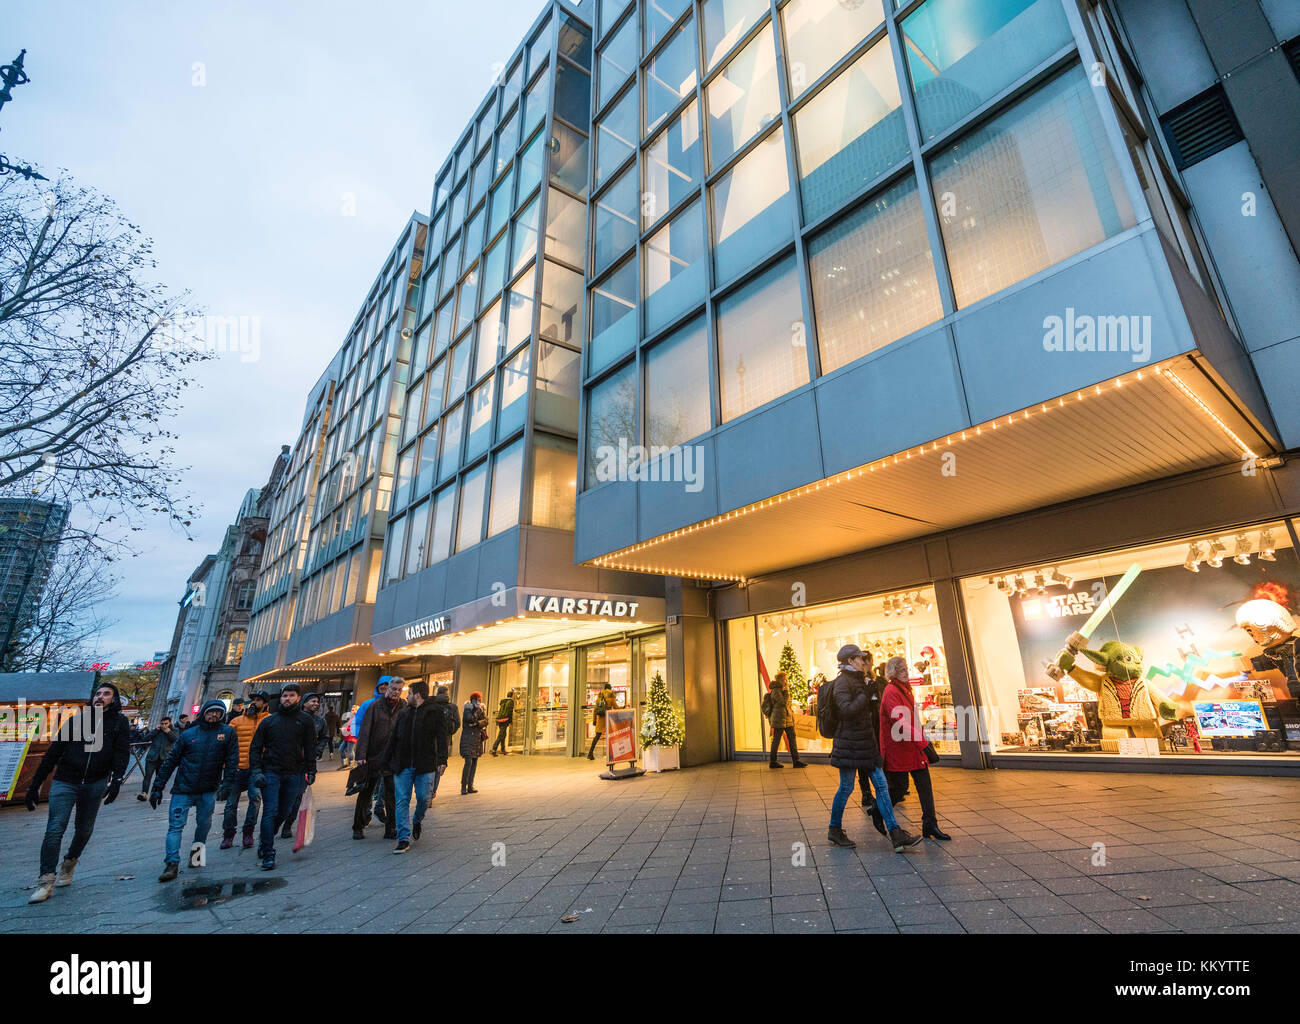 Karstadt department store on famous Kurfurstendamm shopping street in Berlin, Germany. Stock Photo